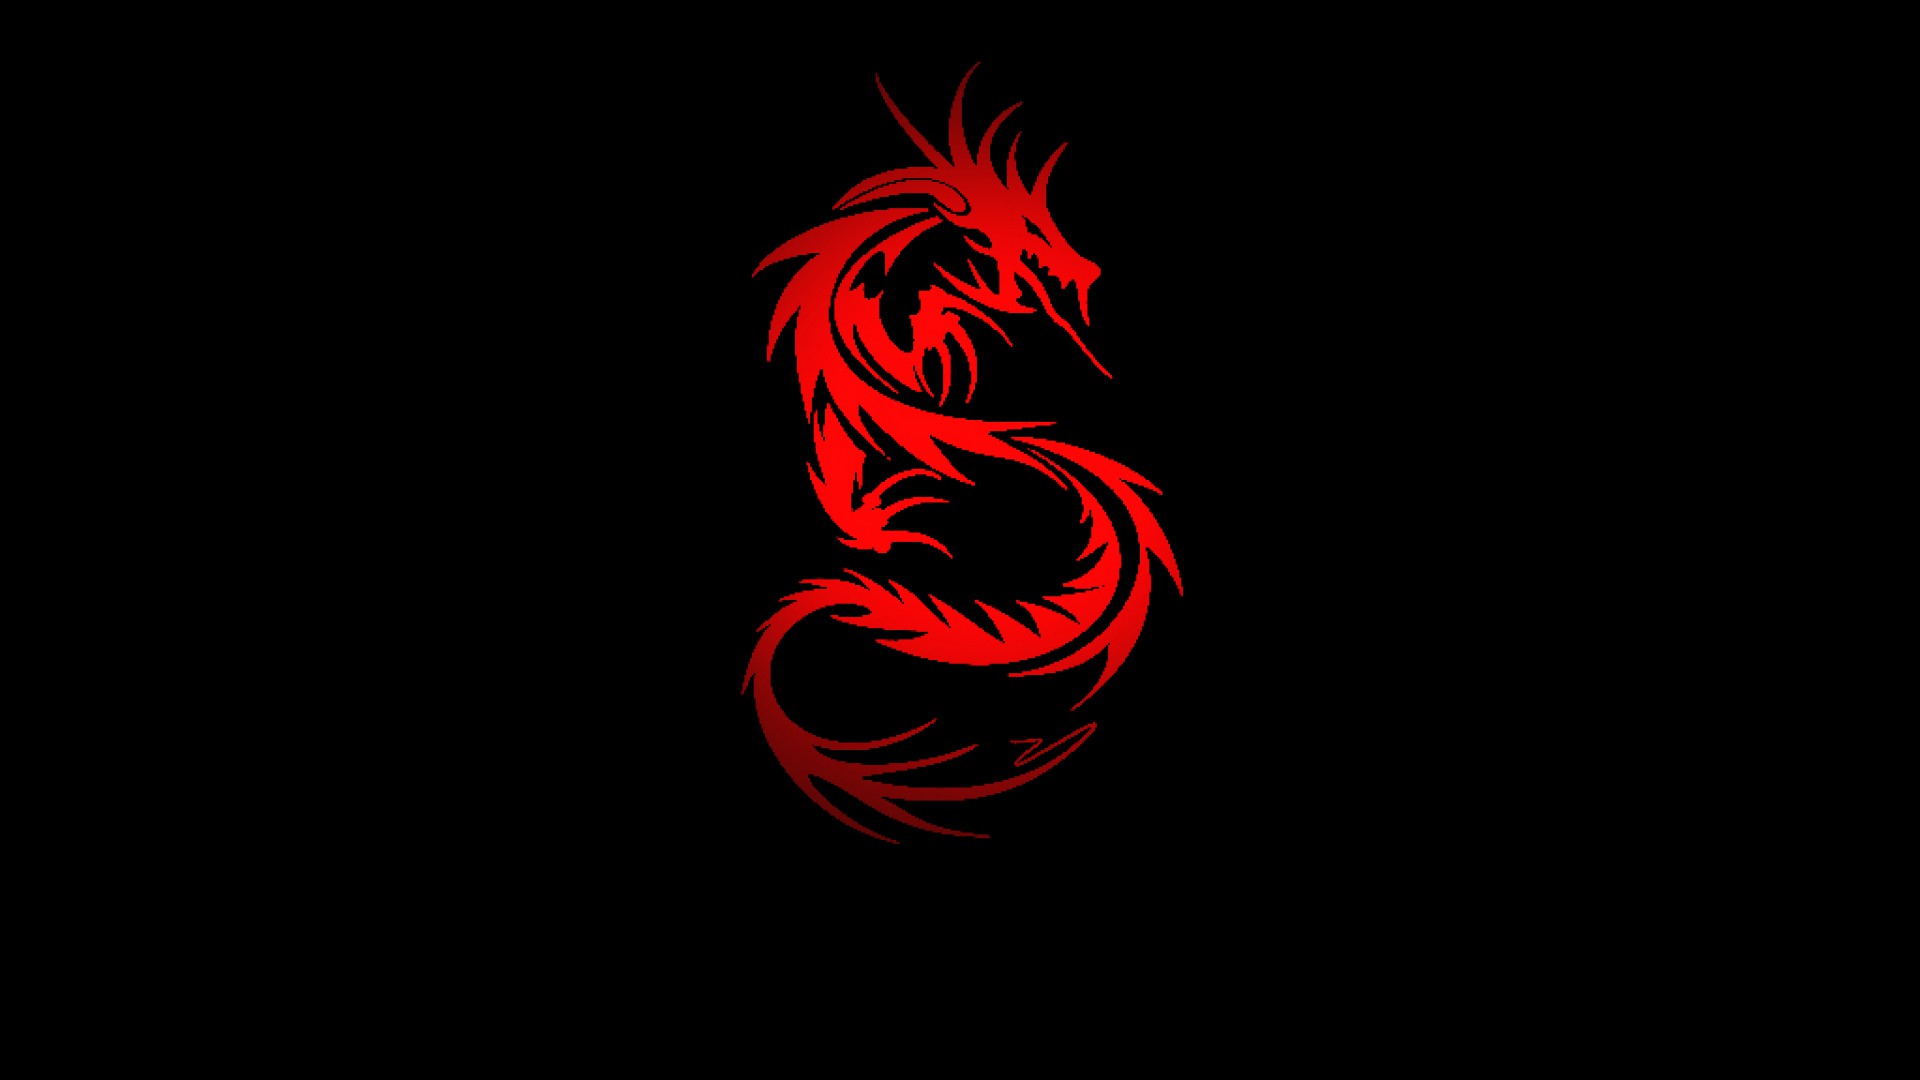 Red Dragon Wallpaper HD 1080p On Picsfair